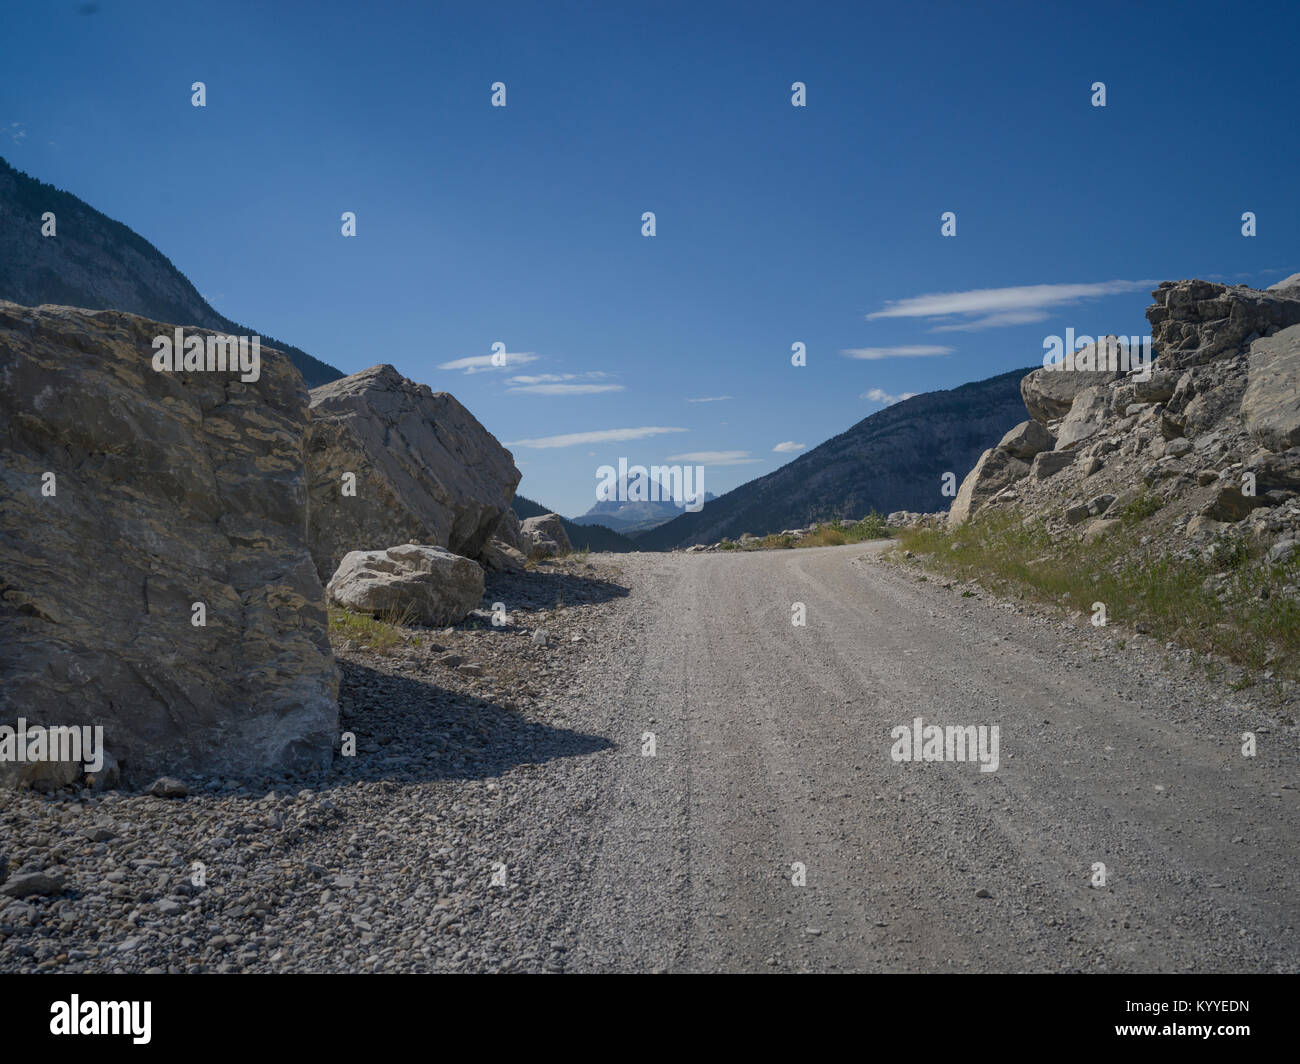 Dirt road passing through mountains, Frank Slide, Kananaskis Country, Southern Alberta, Alberta, Canada Stock Photo